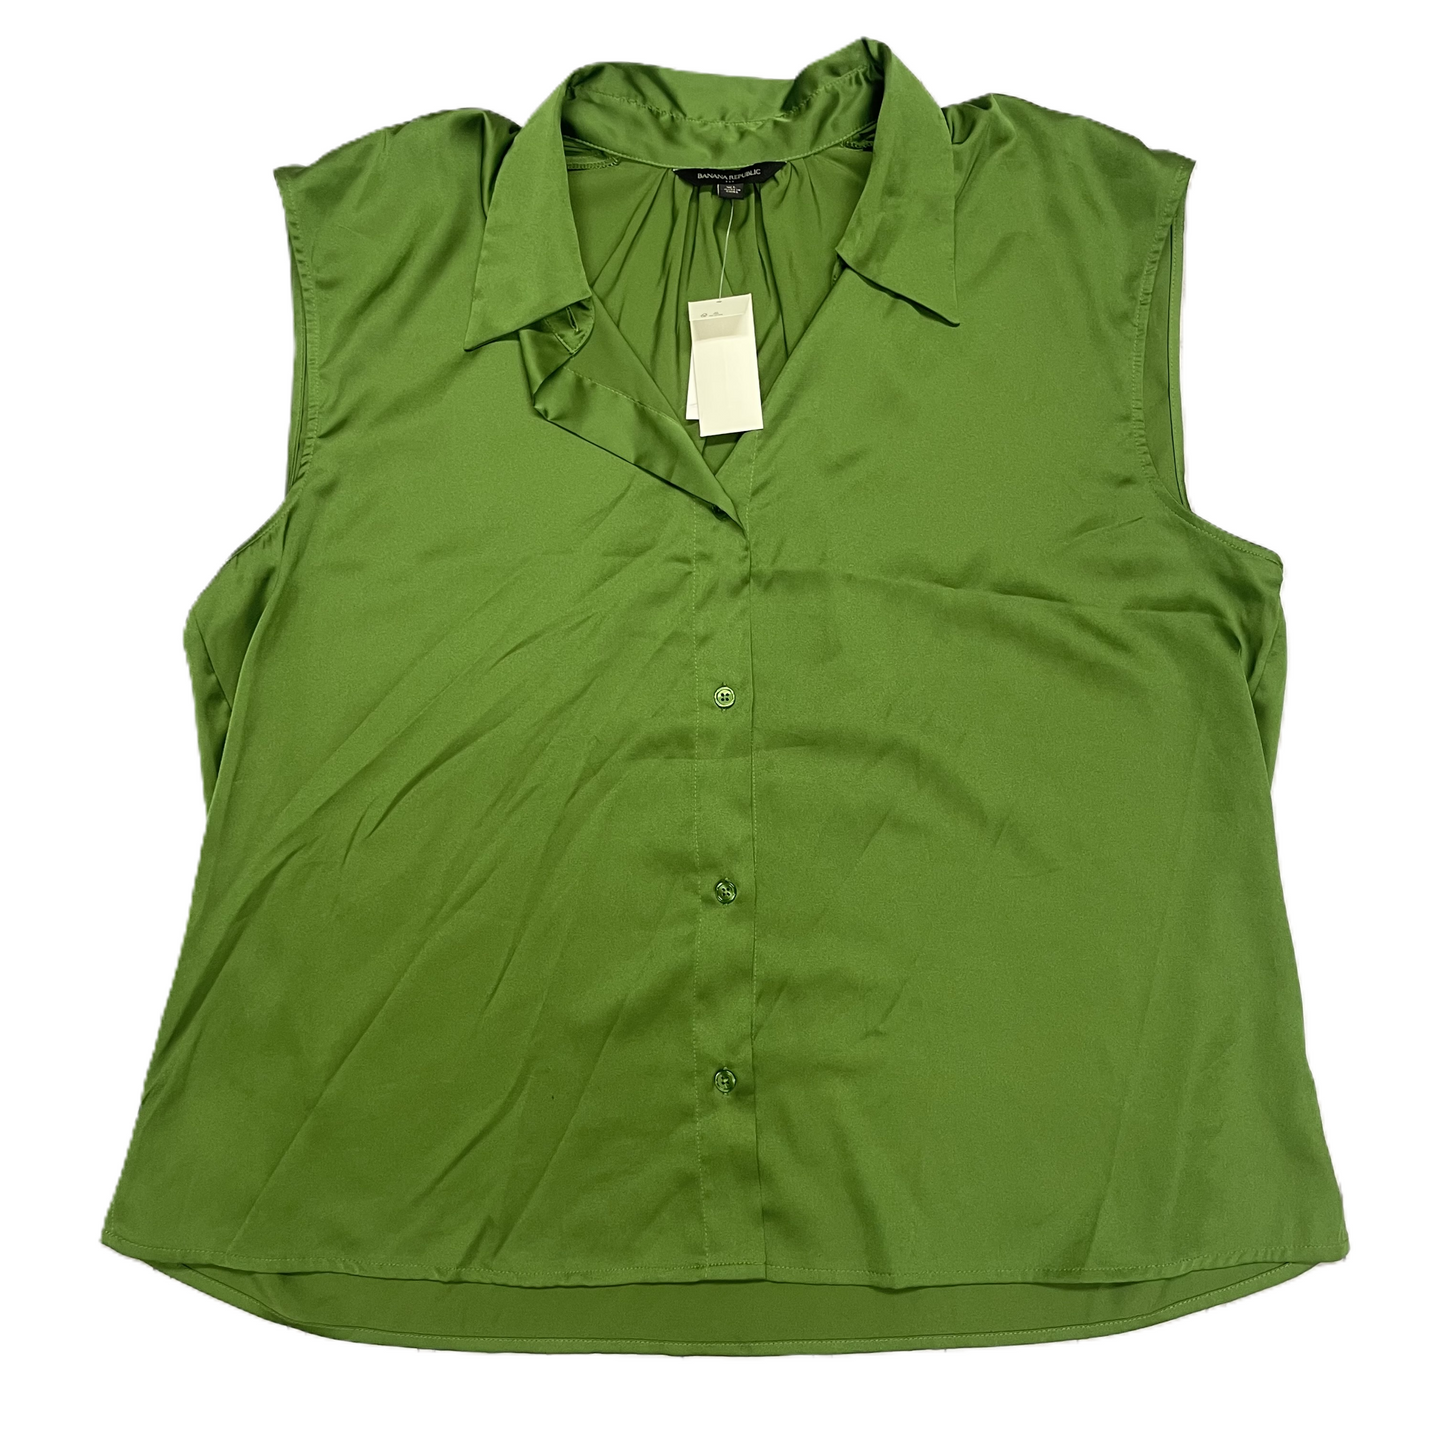 Green Blouse Sleeveless By Banana Republic, Size: XL